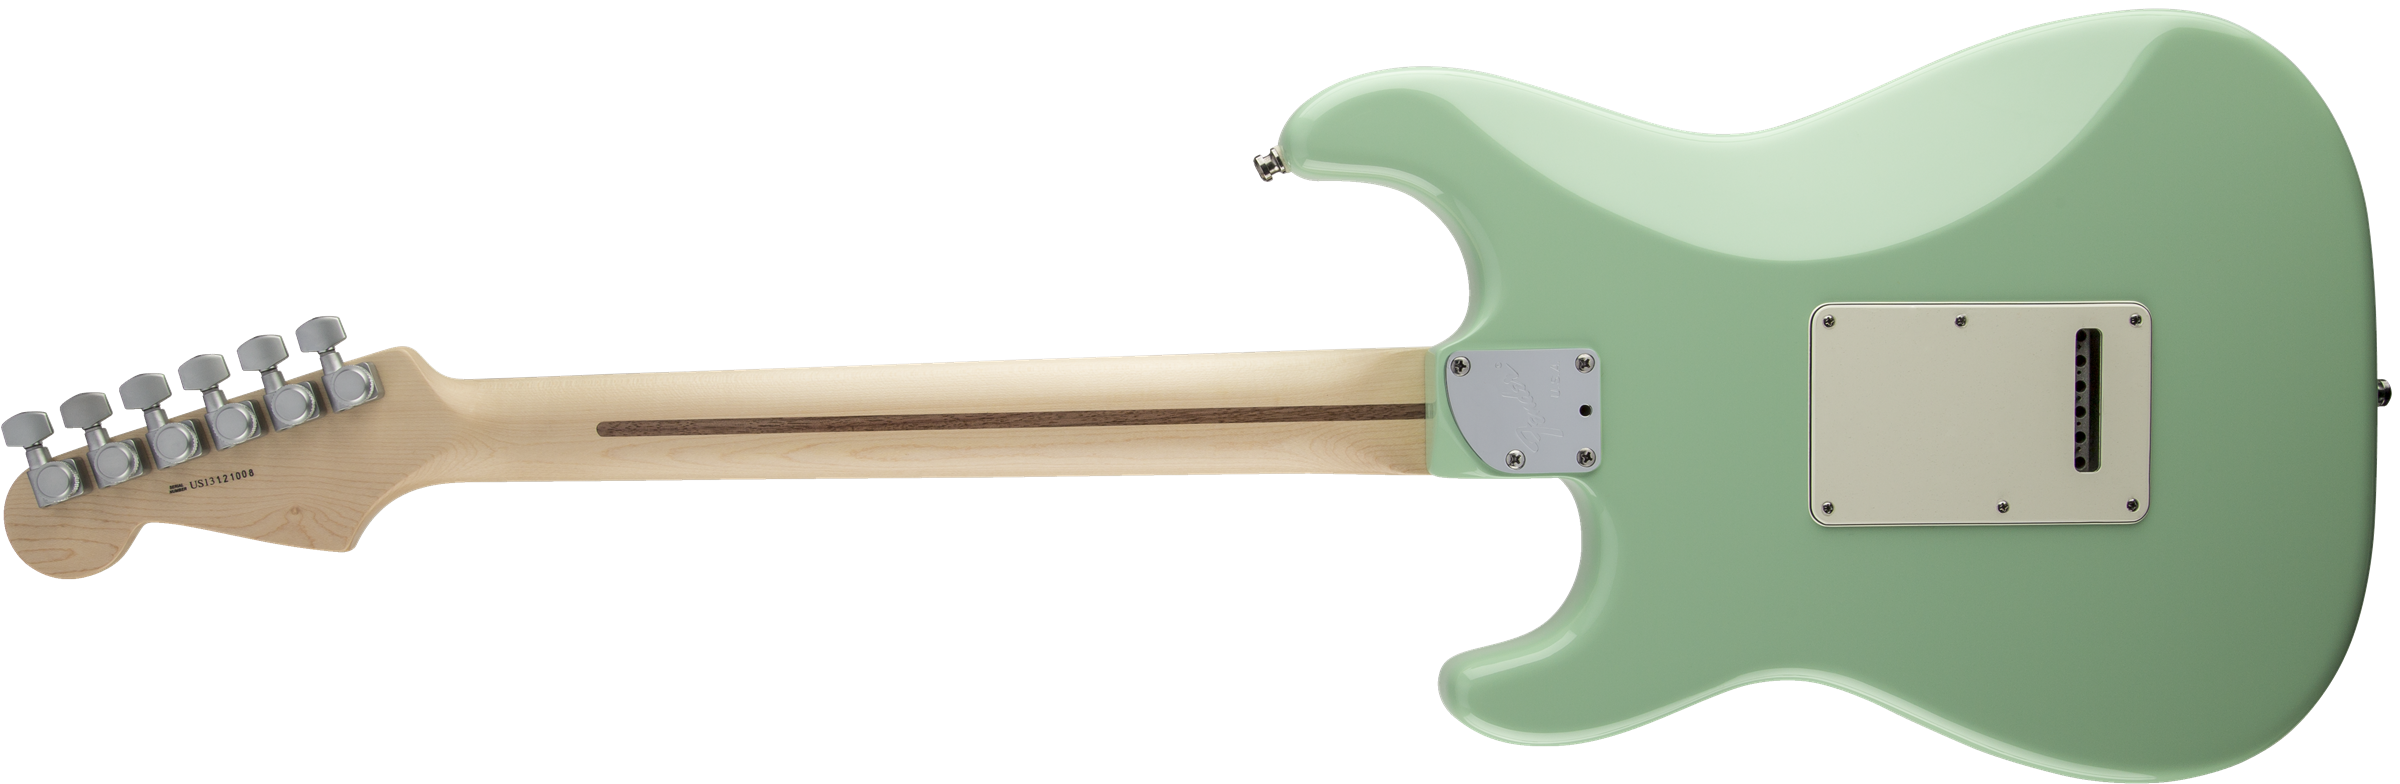 Fender Stratocaster Jeff Beck - Surf Green - Elektrische gitaar in Str-vorm - Variation 1